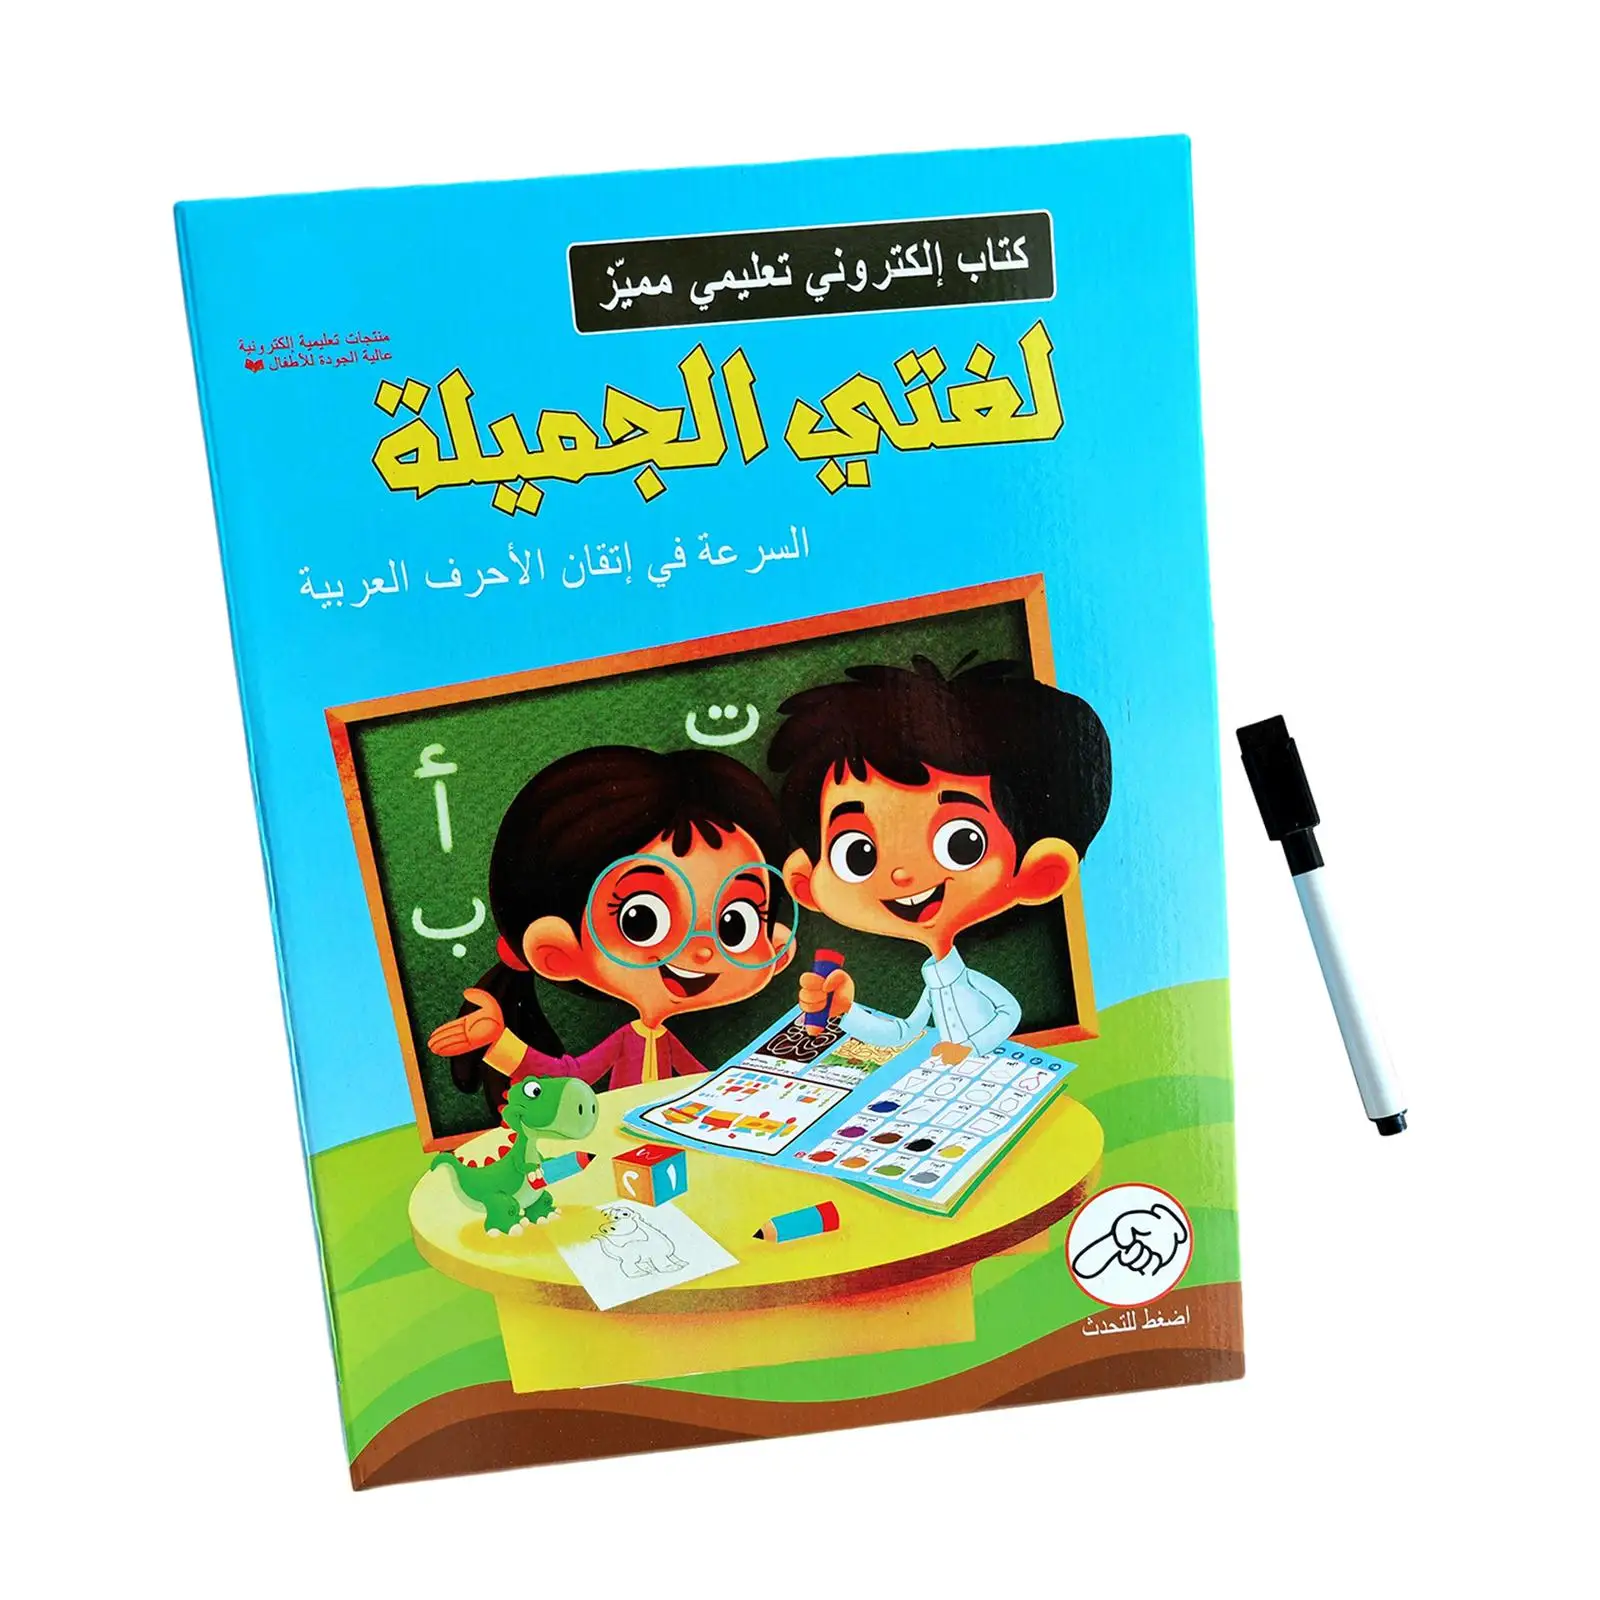 Arabic Reading Machine, Arabic Word Learning for Kids Children Girls Boys Bithday Gifts